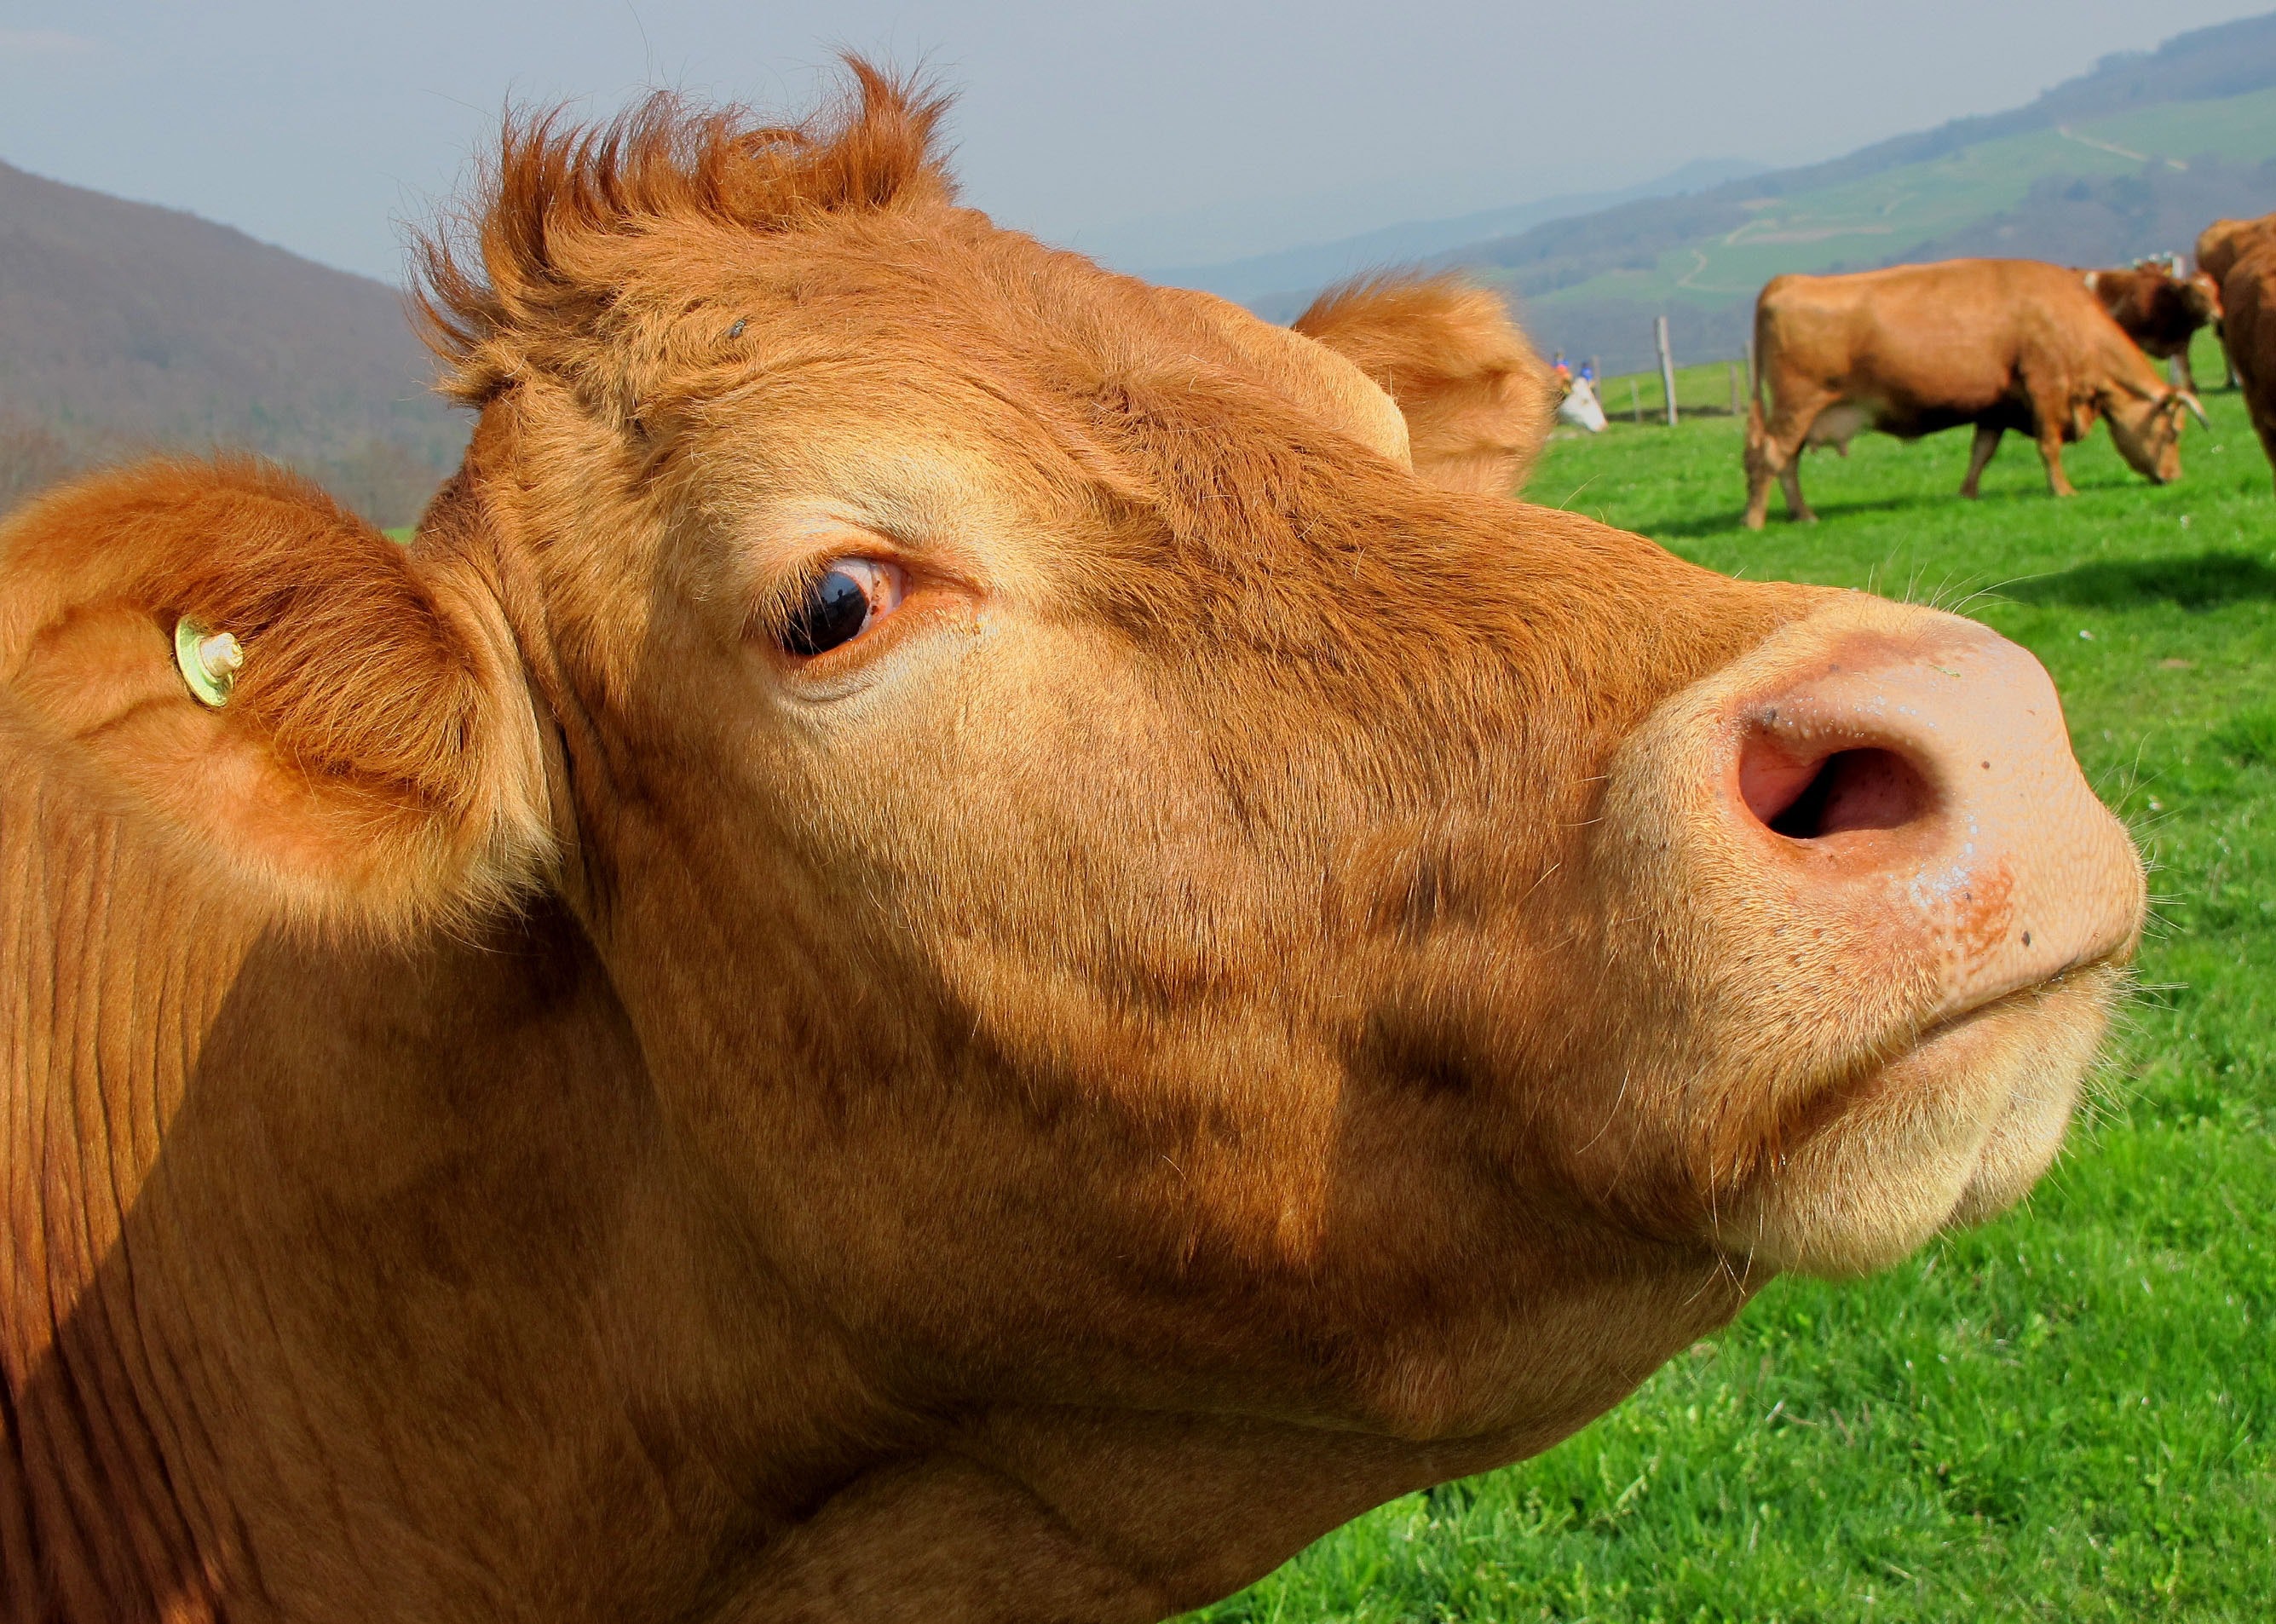 Cow Pictures · Pexels · Free Stock Photos